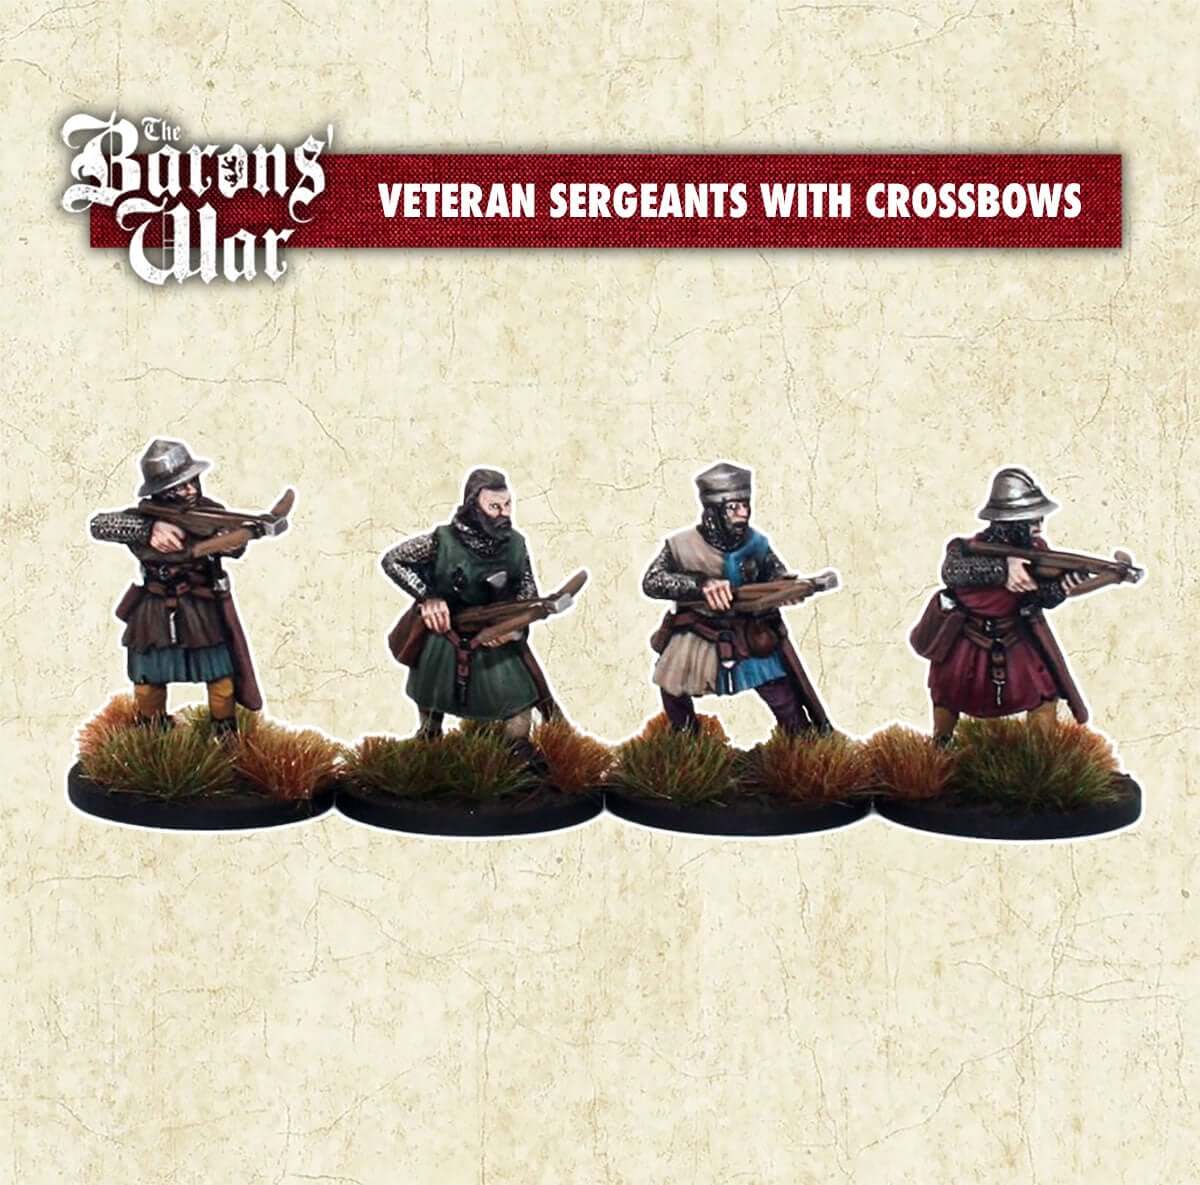 Baron's War Veteran Sergeants with Crossbows